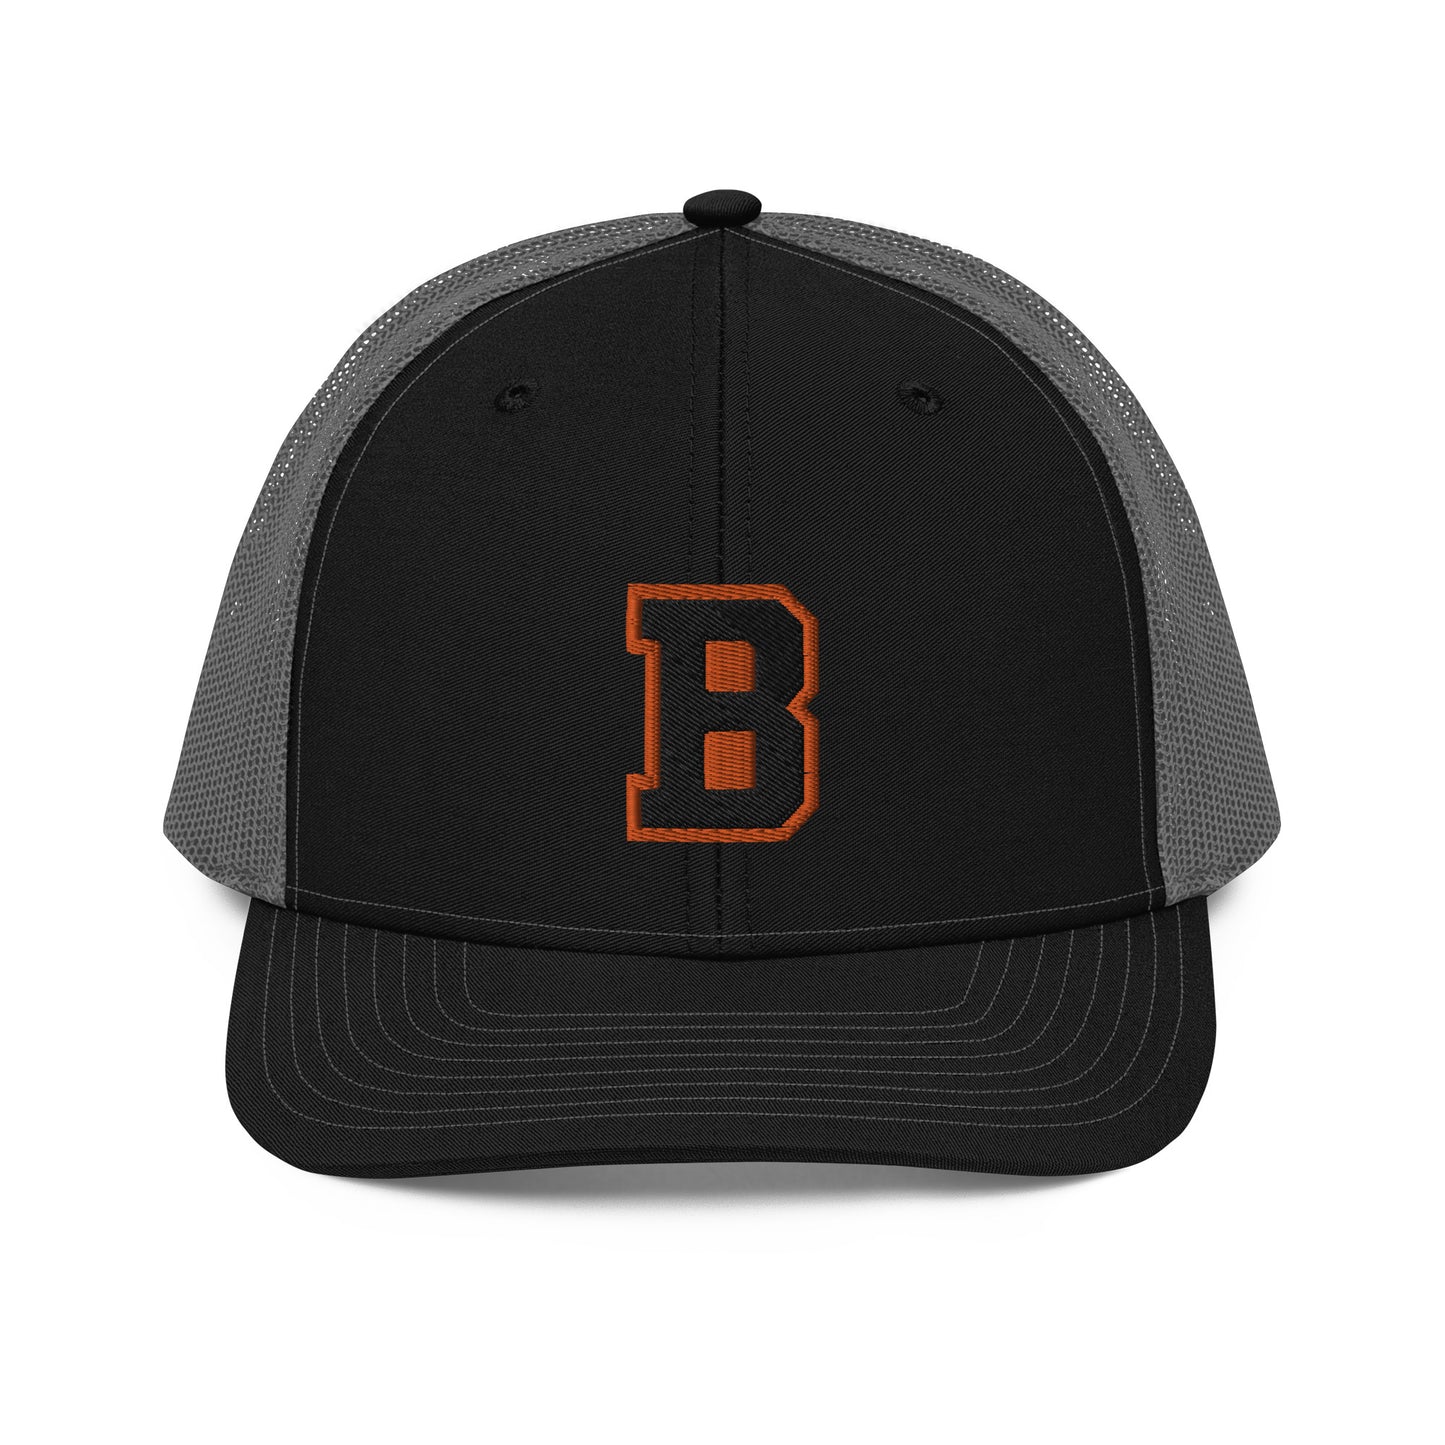 WBLHSB B Trucker Cap